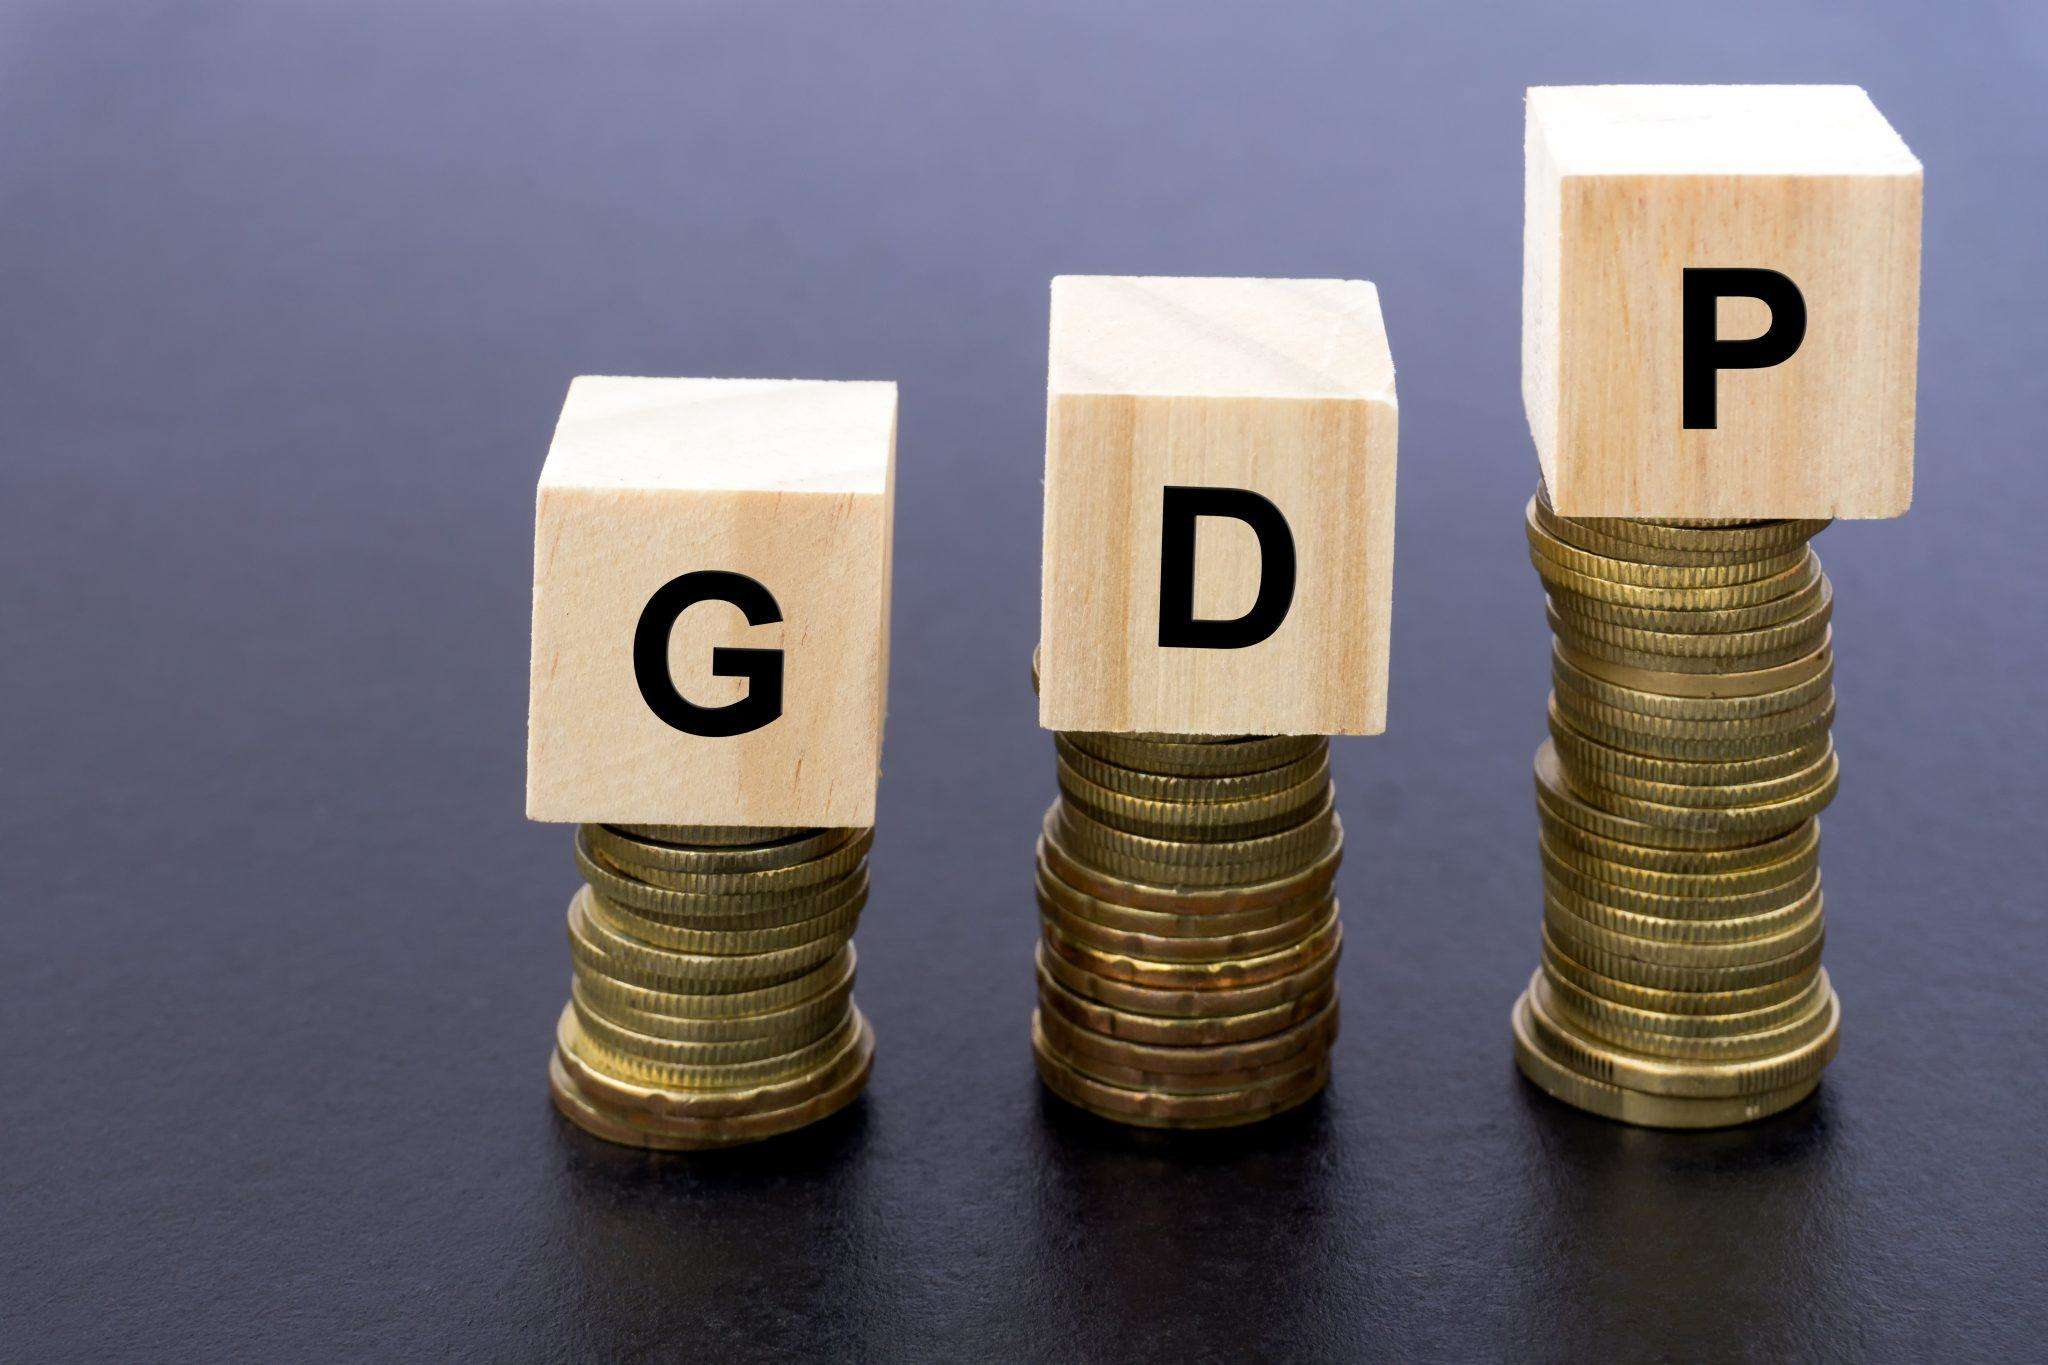 भारत की GDP 5.1 फीसदी रहने काअनुमान